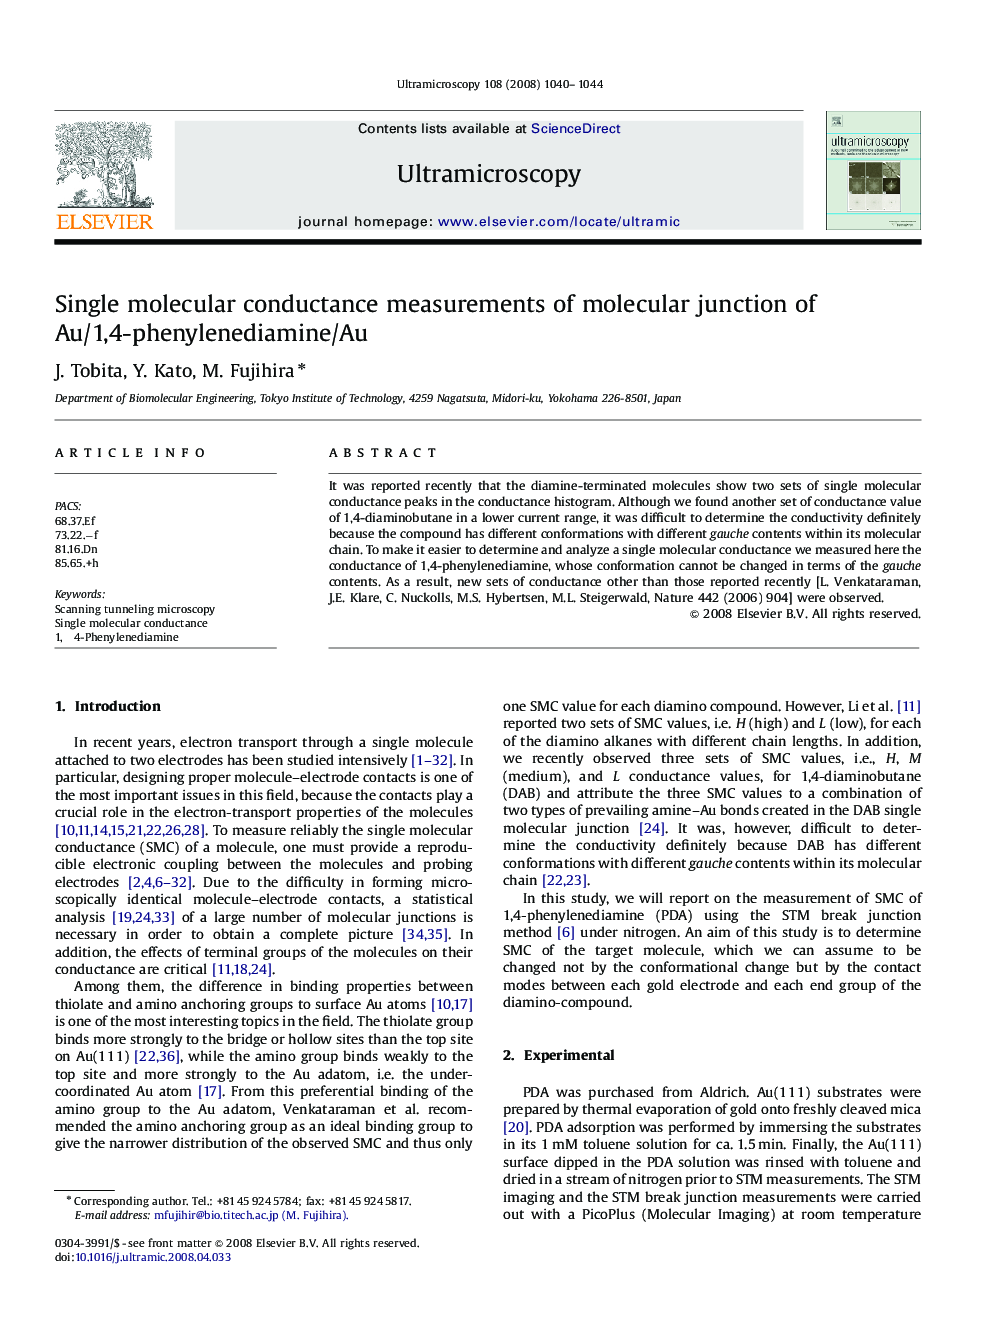 Single molecular conductance measurements of molecular junction of Au/1,4-phenylenediamine/Au